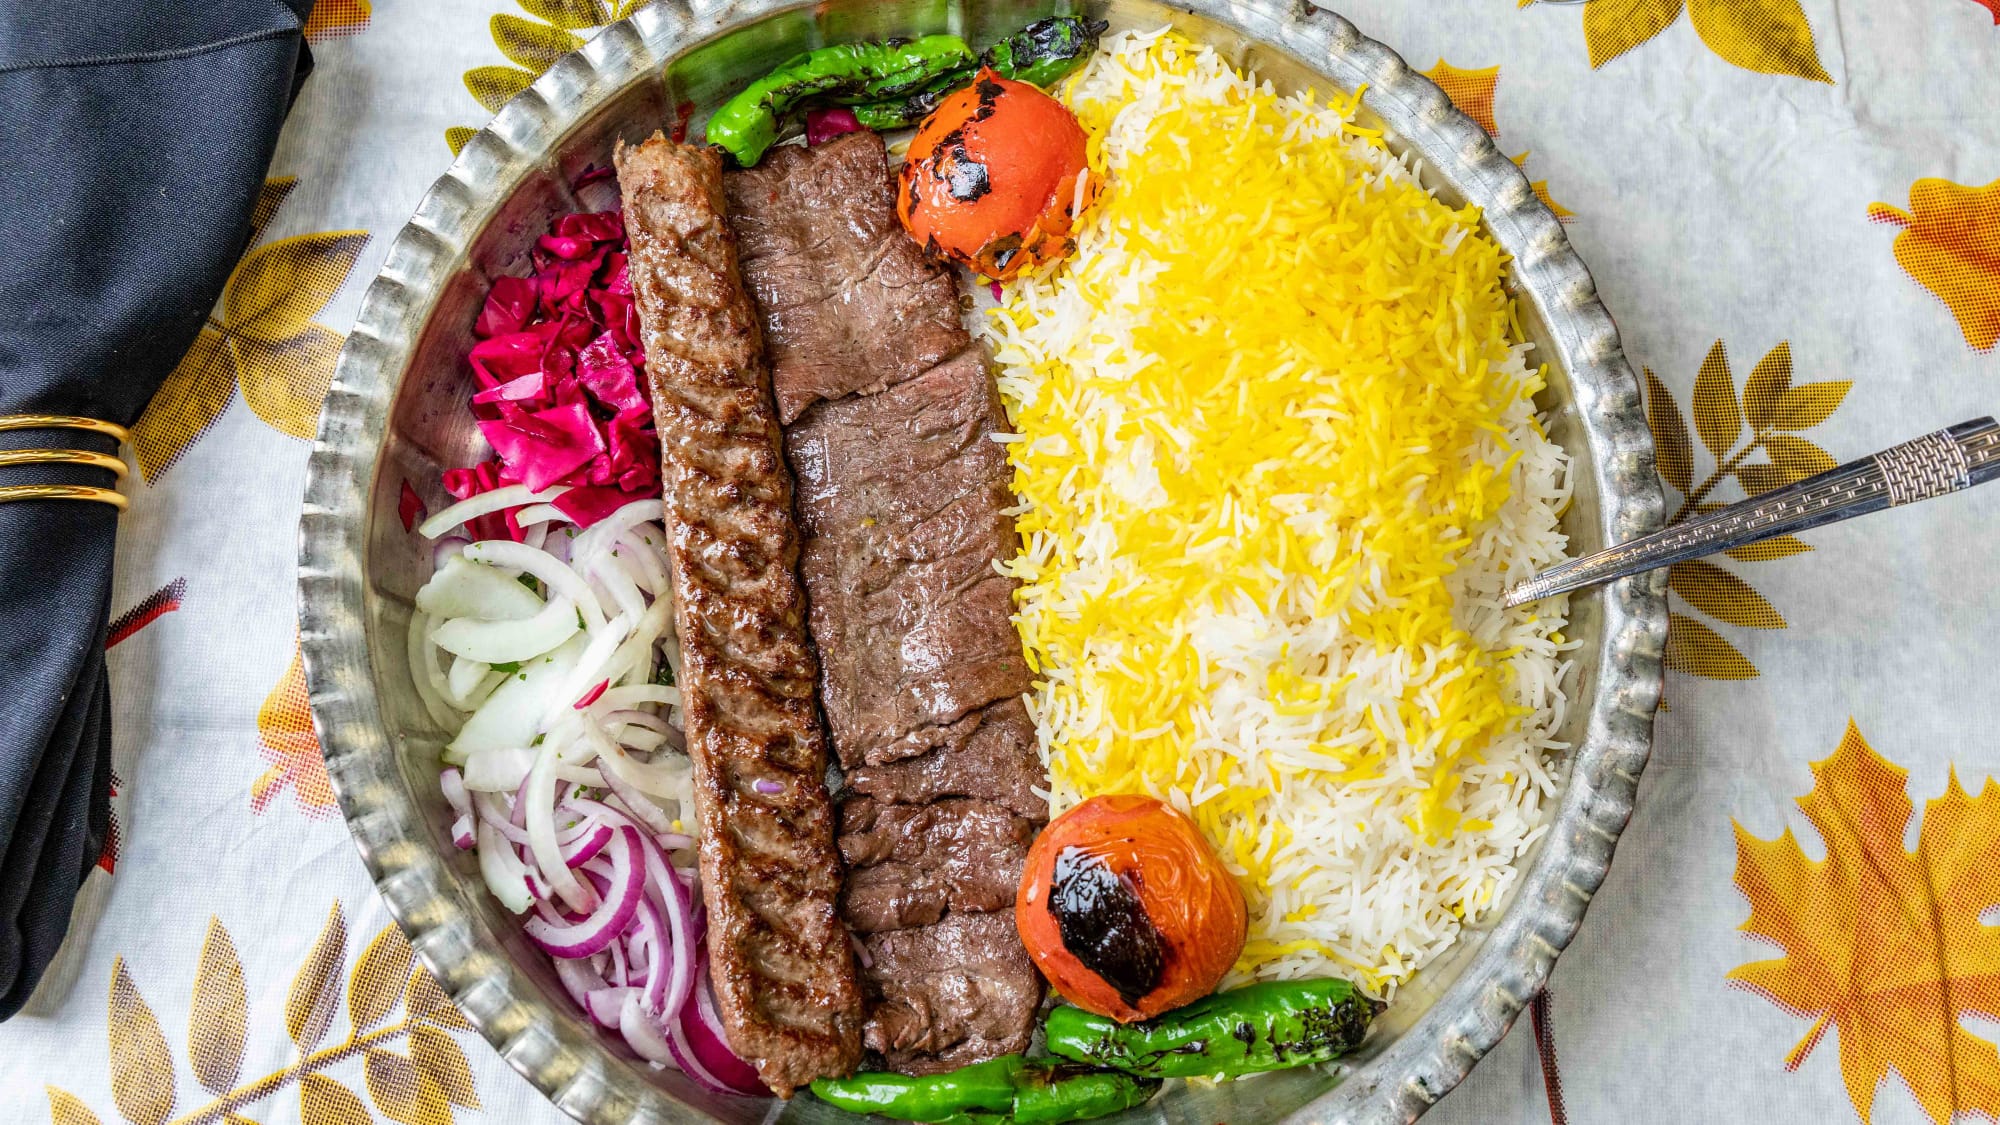 shawarma plate